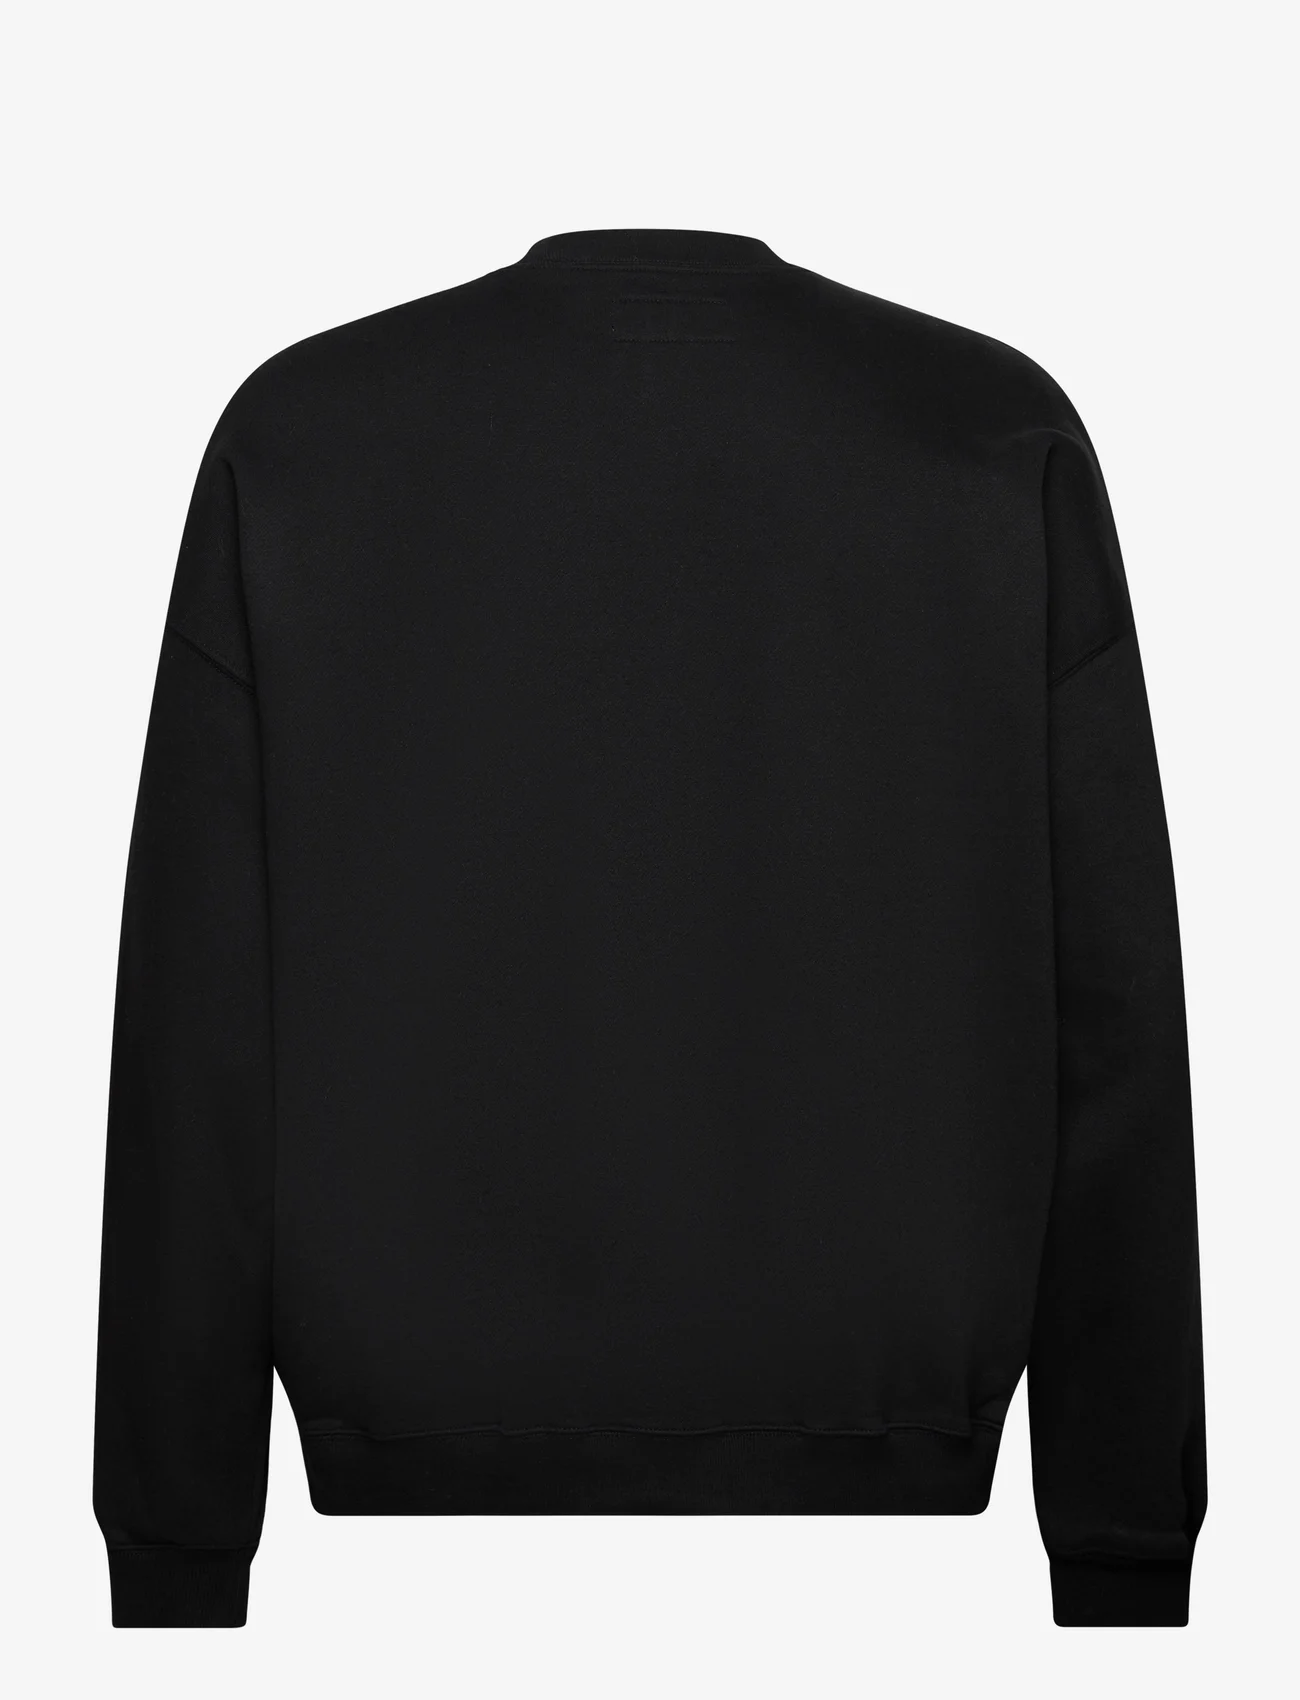 Abercrombie & Fitch - ANF MENS SWEATSHIRTS - sweatshirts - casual black - 1